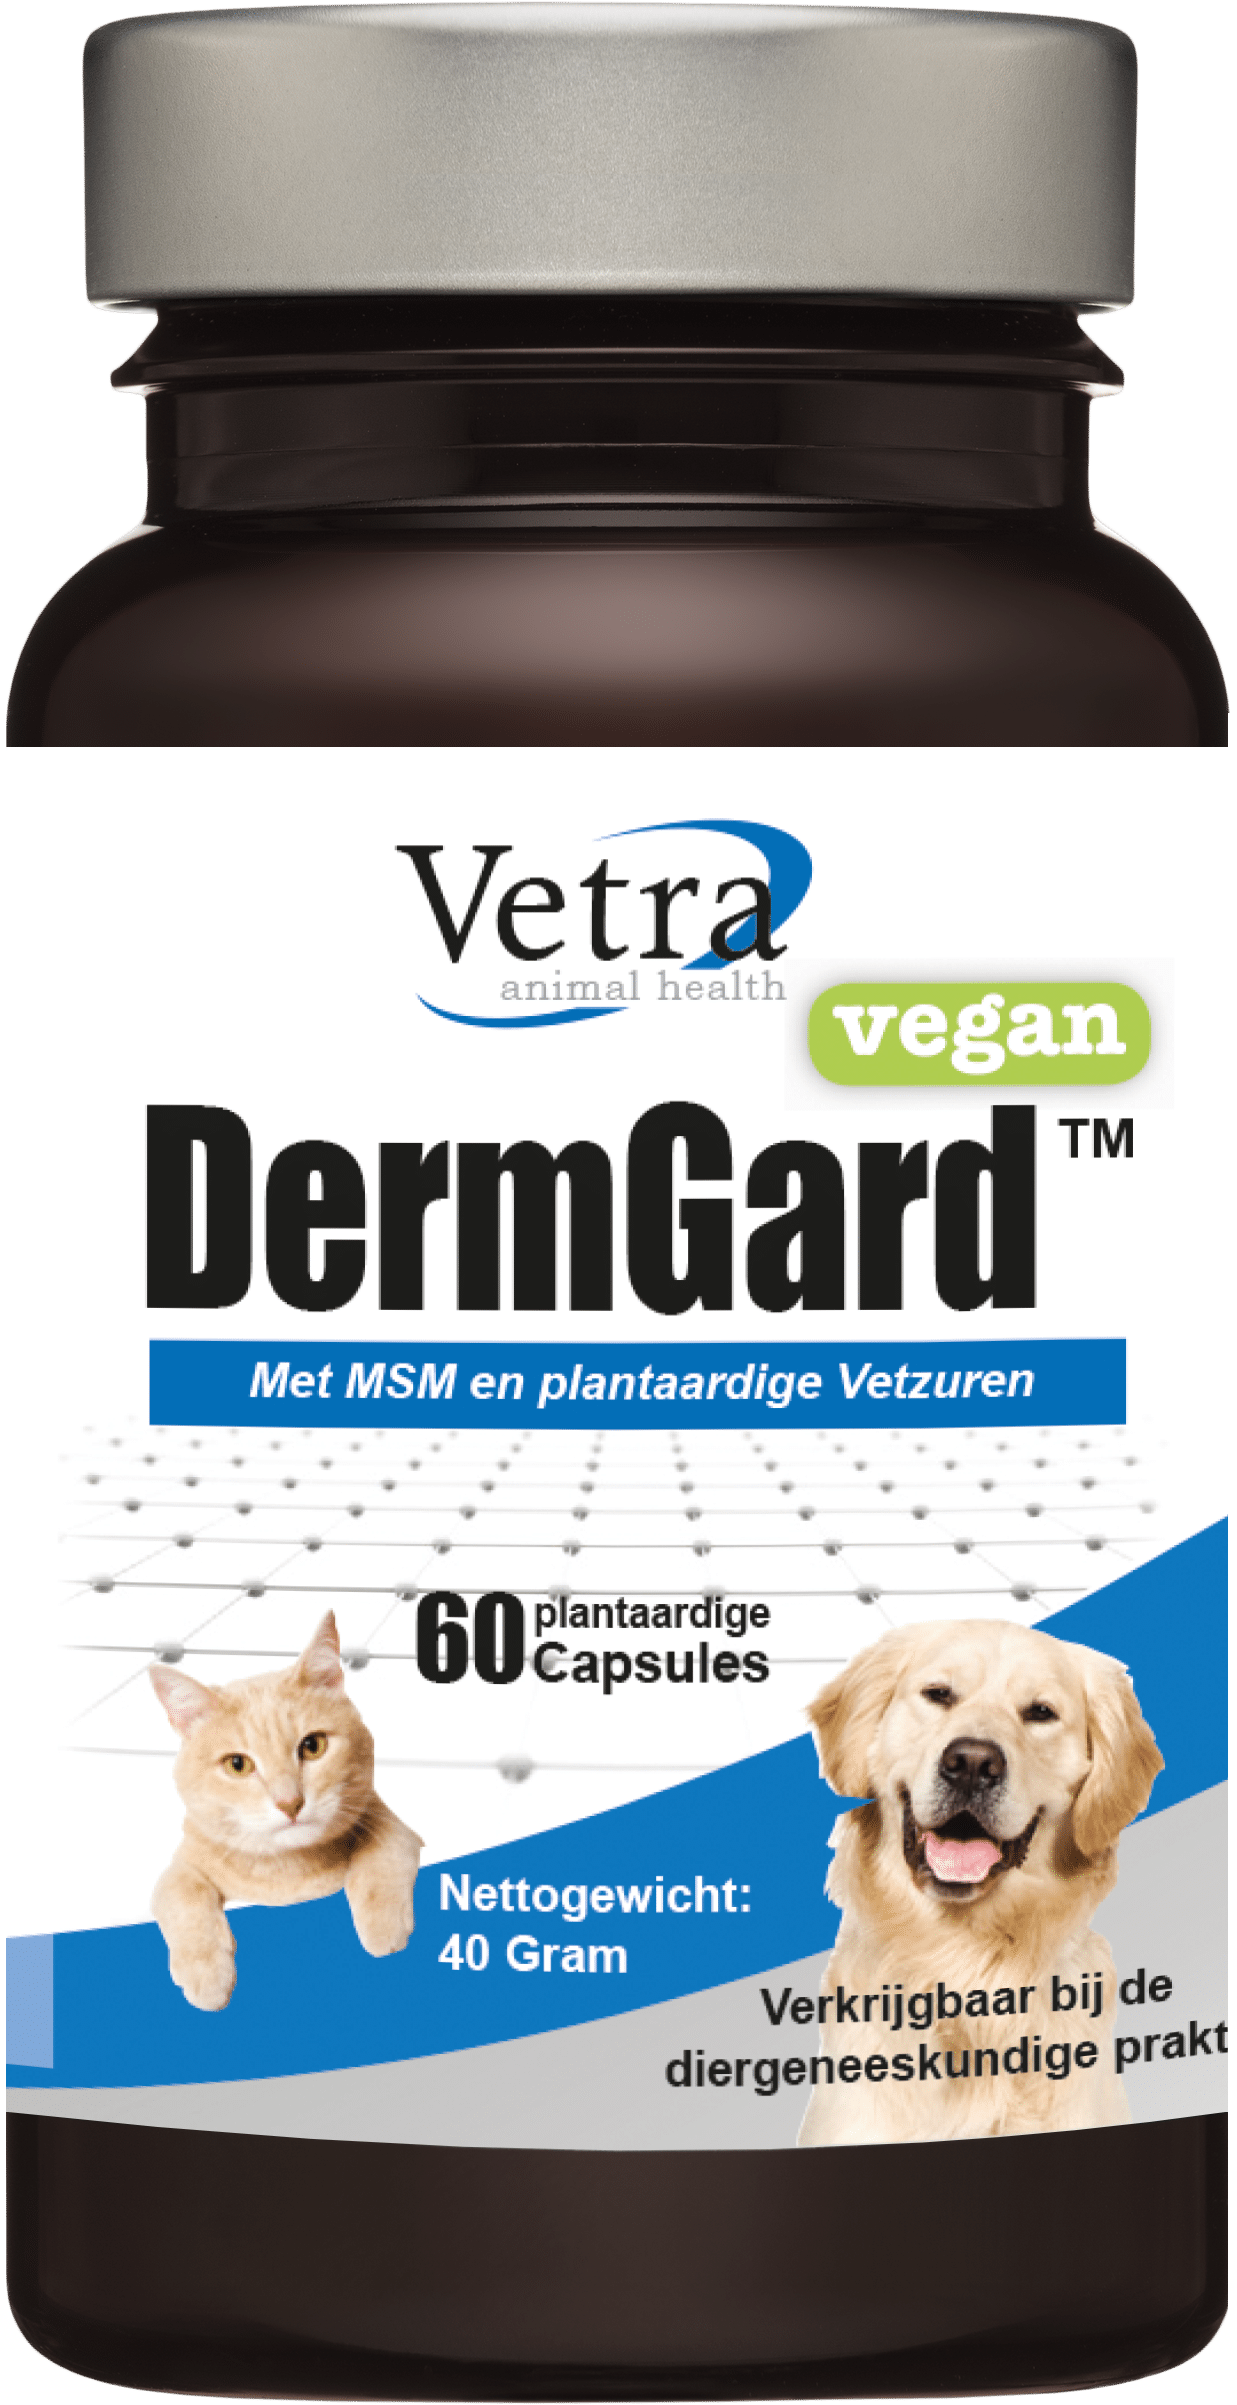 Dermgard Vegan-2